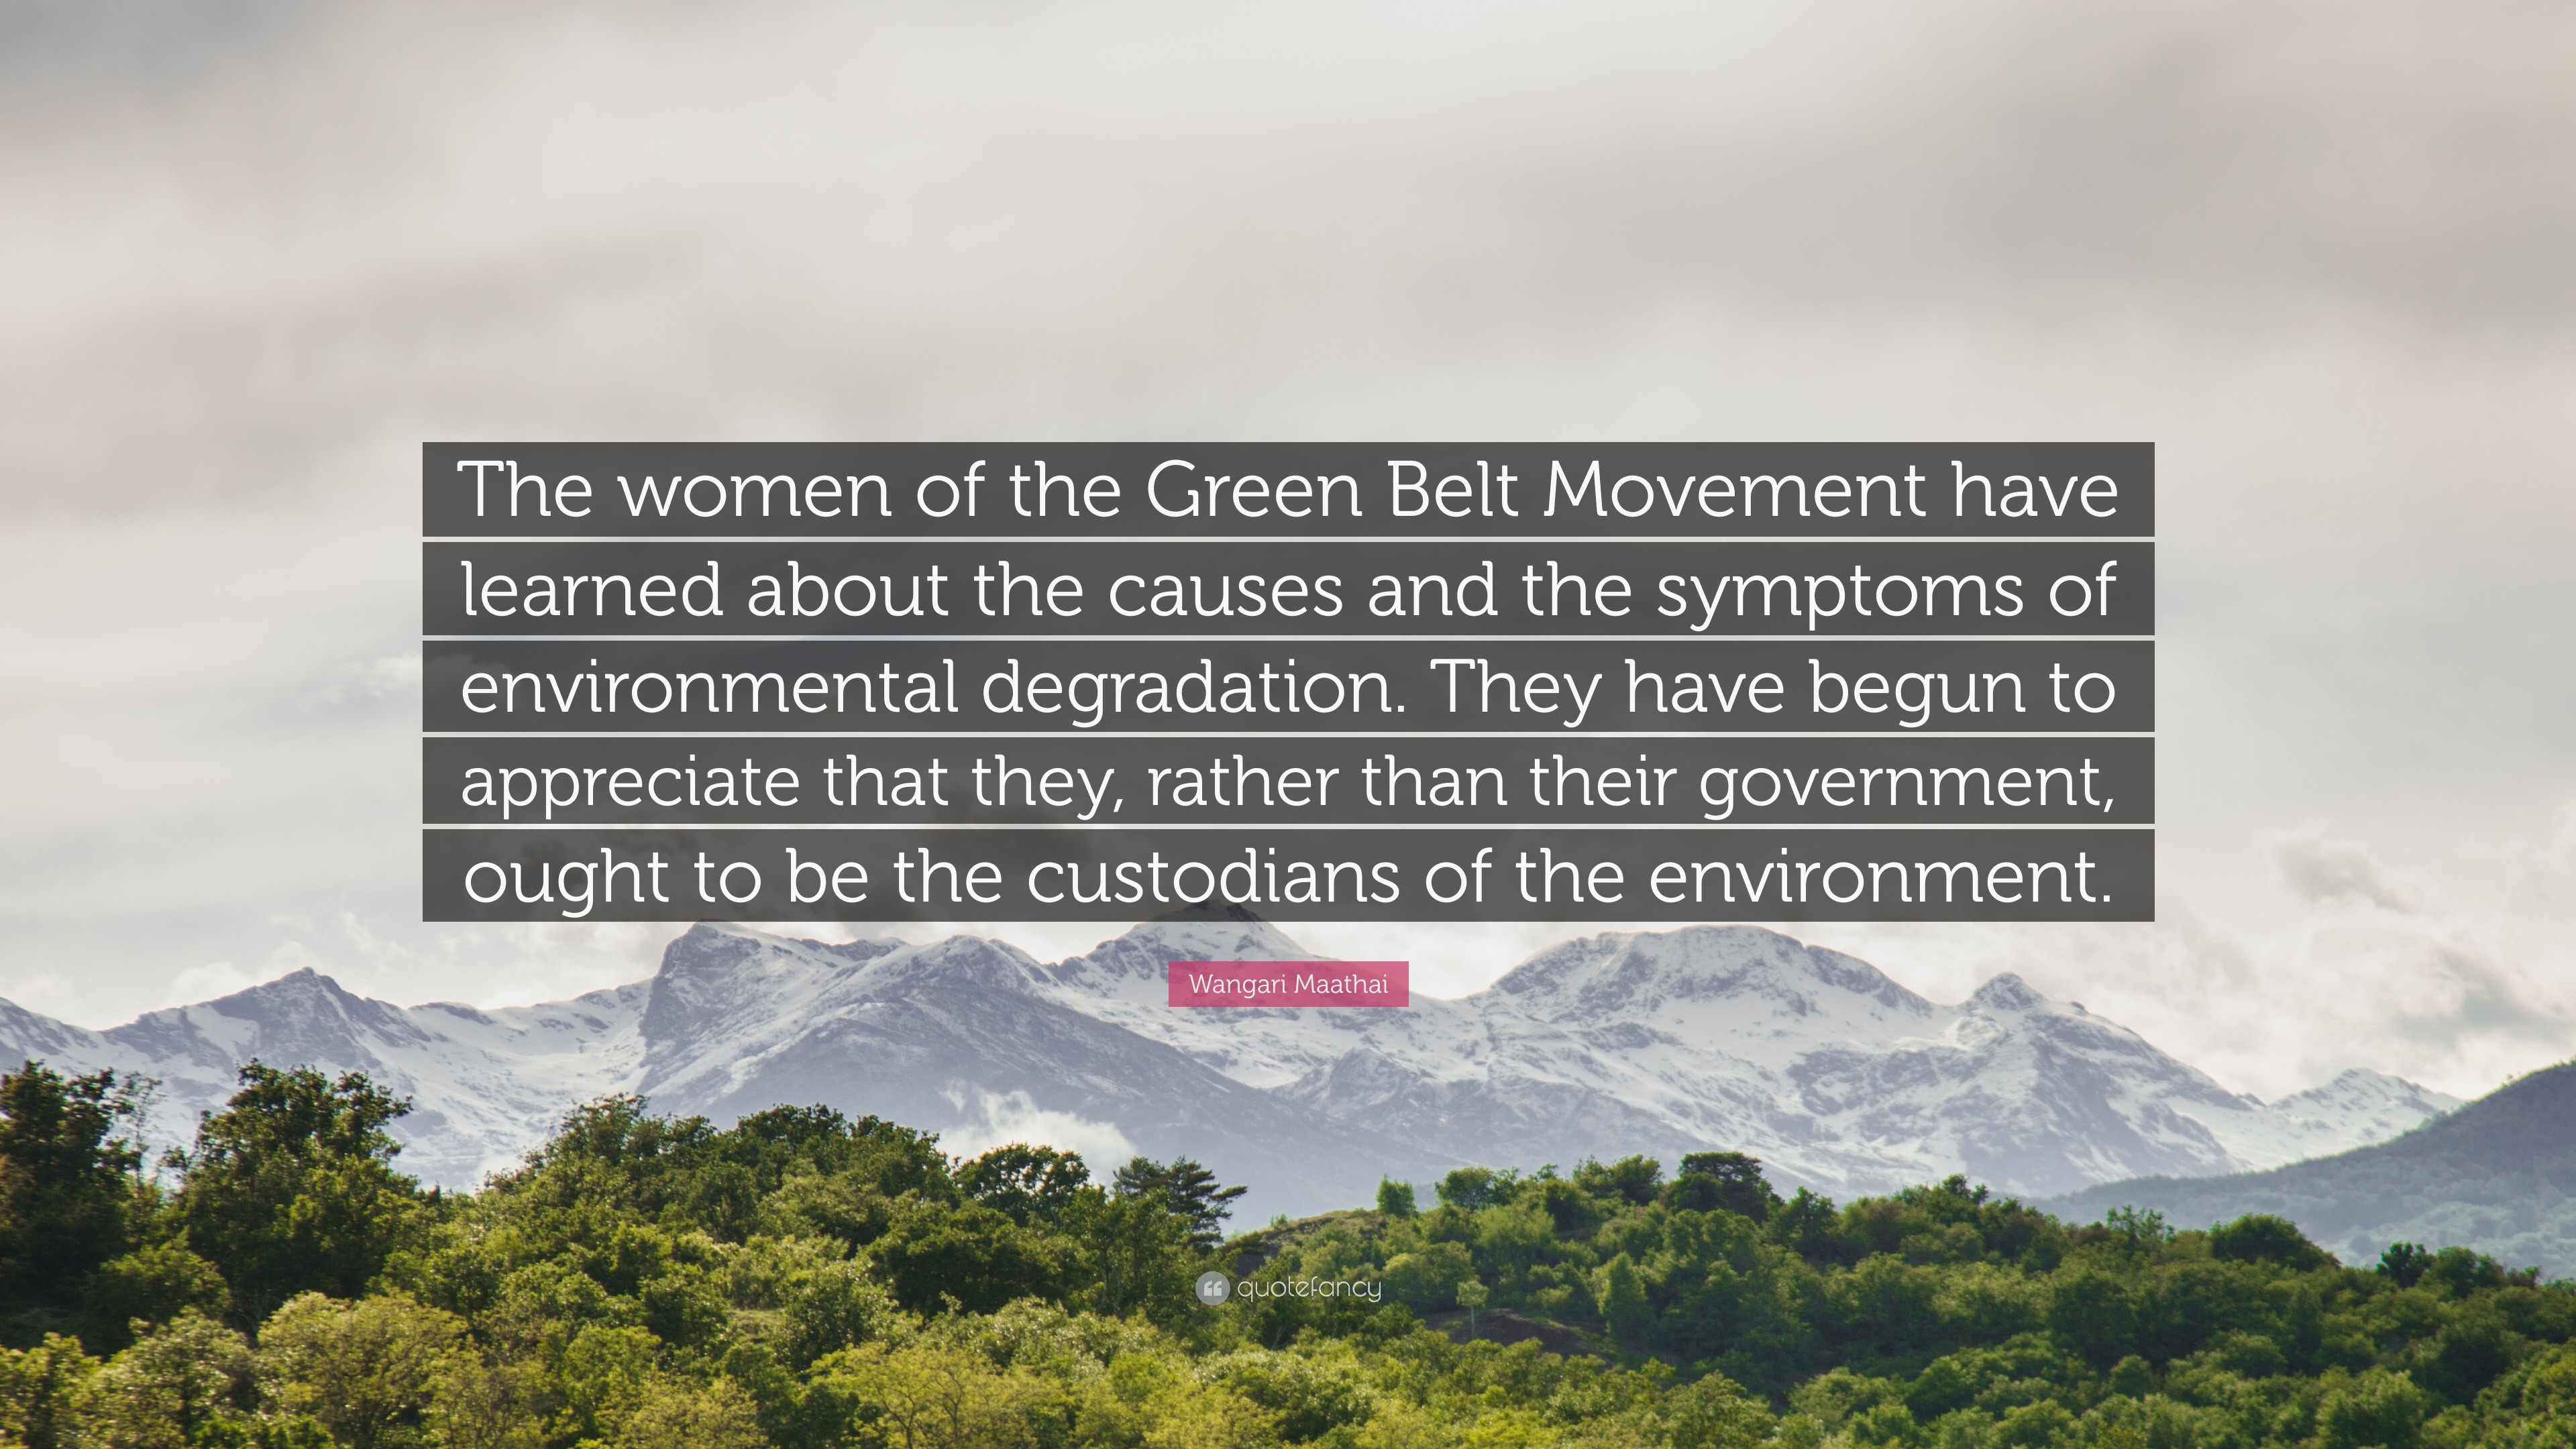 Wangari Maathai Quote: “The women of the Green Belt Movement have